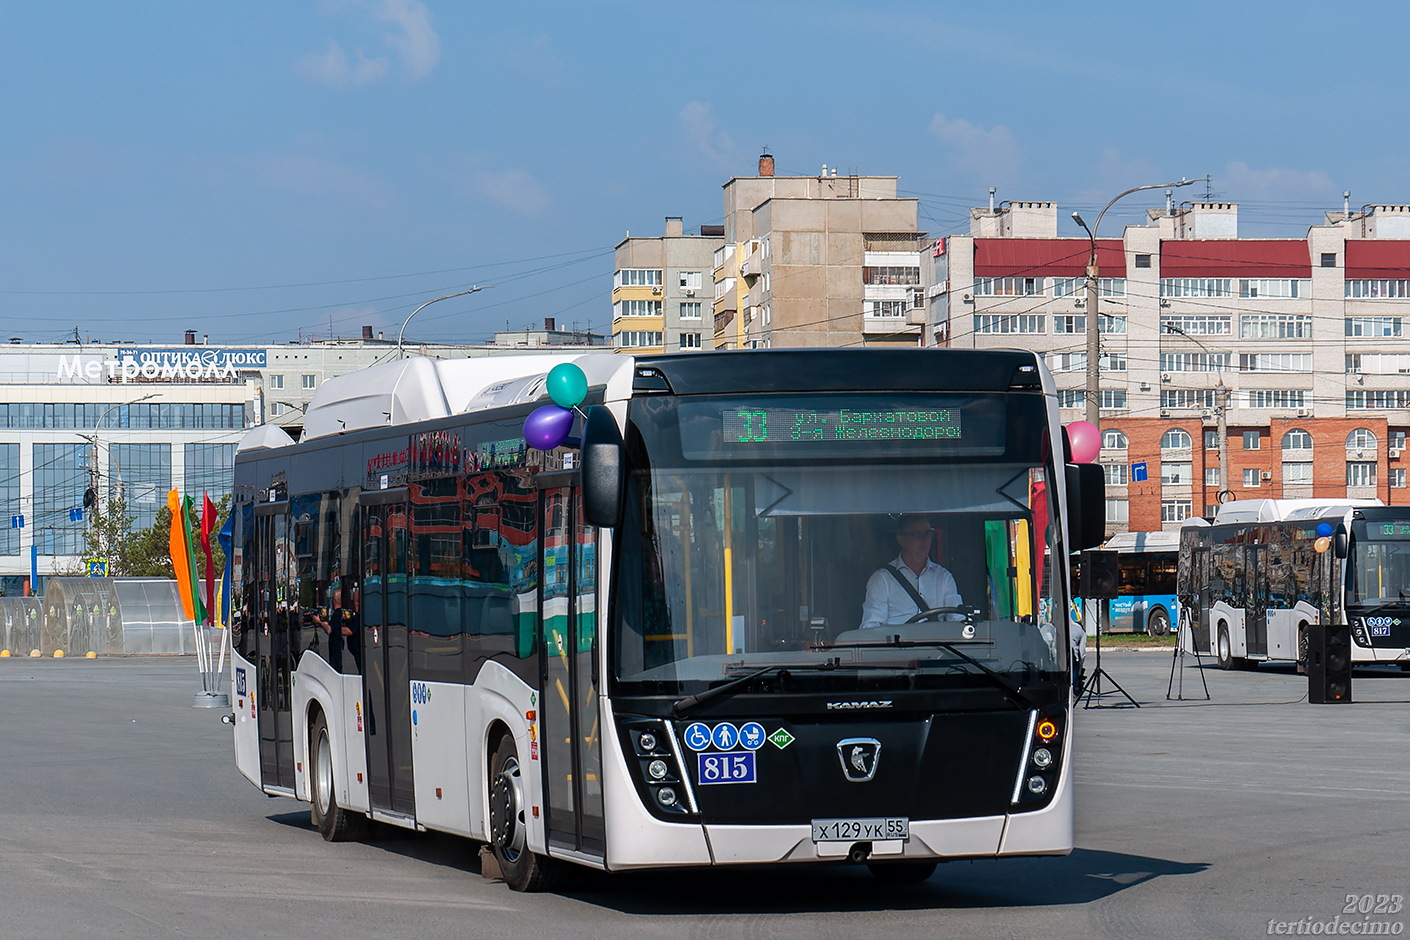 Omsk region, NefAZ-5299-40-57 (CNG) # 815; Omsk region — 26.09.2023 — NefAZ-5299-40-57 buses presentation